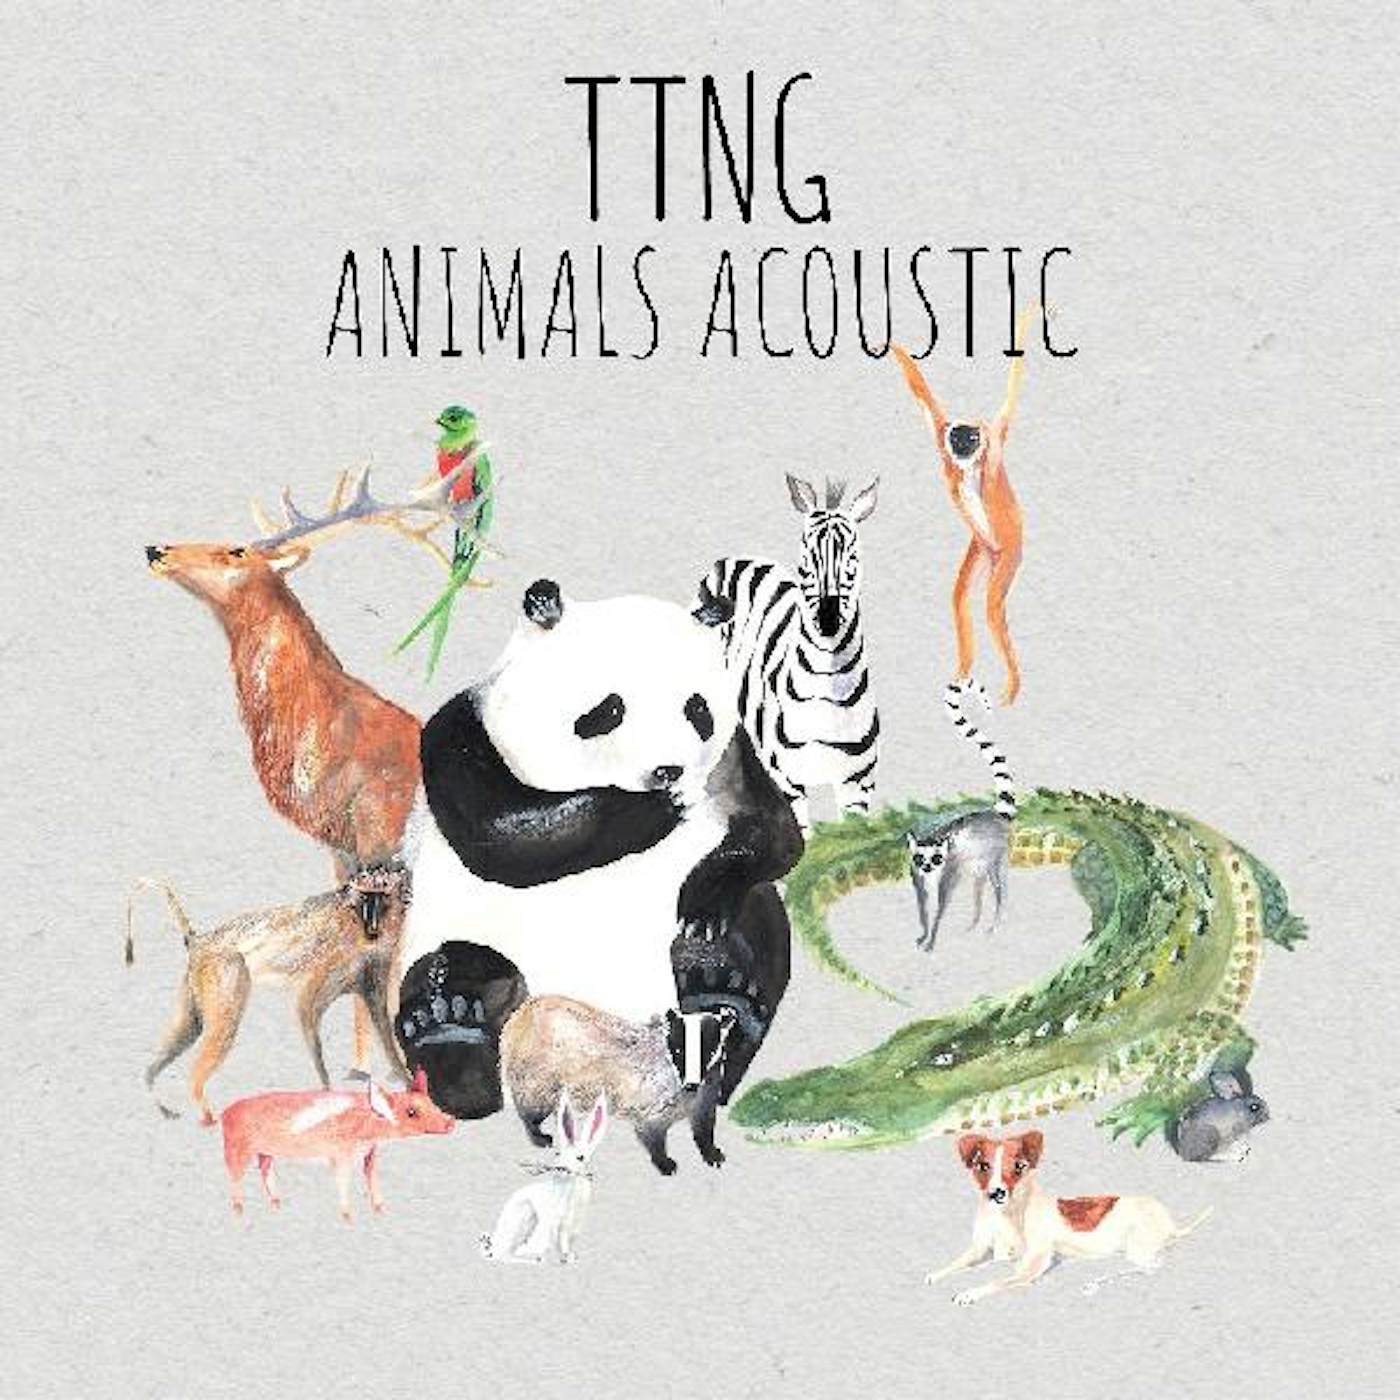 TTNG Animals Acoustic Vinyl Record